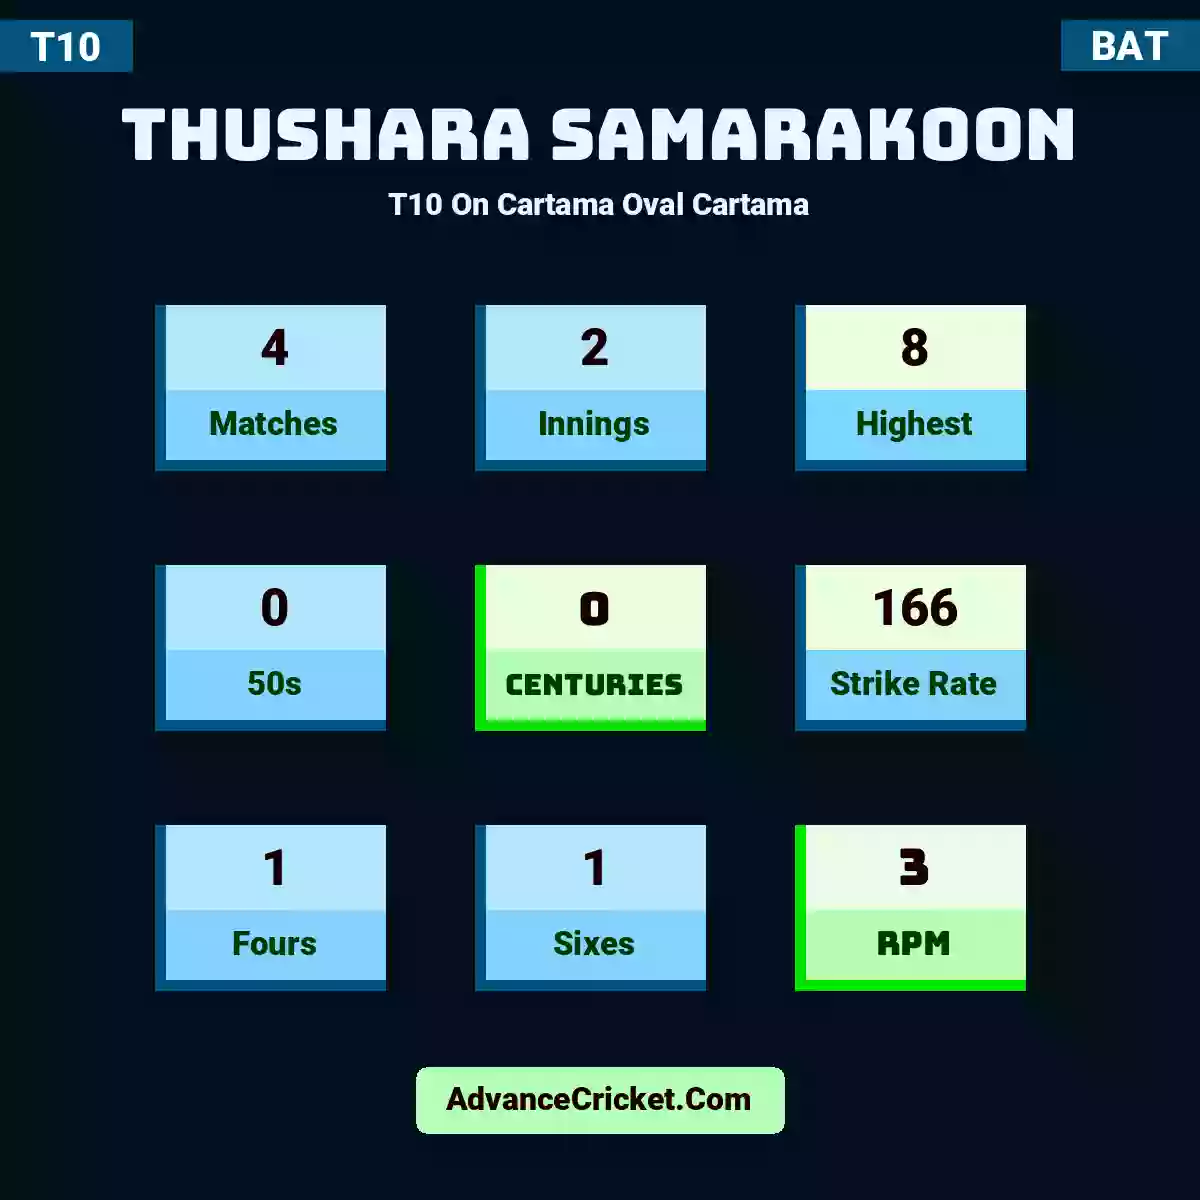 Thushara Samarakoon T10  On Cartama Oval Cartama, Thushara Samarakoon played 4 matches, scored 8 runs as highest, 0 half-centuries, and 0 centuries, with a strike rate of 166. T.Samarakoon hit 1 fours and 1 sixes, with an RPM of 3.